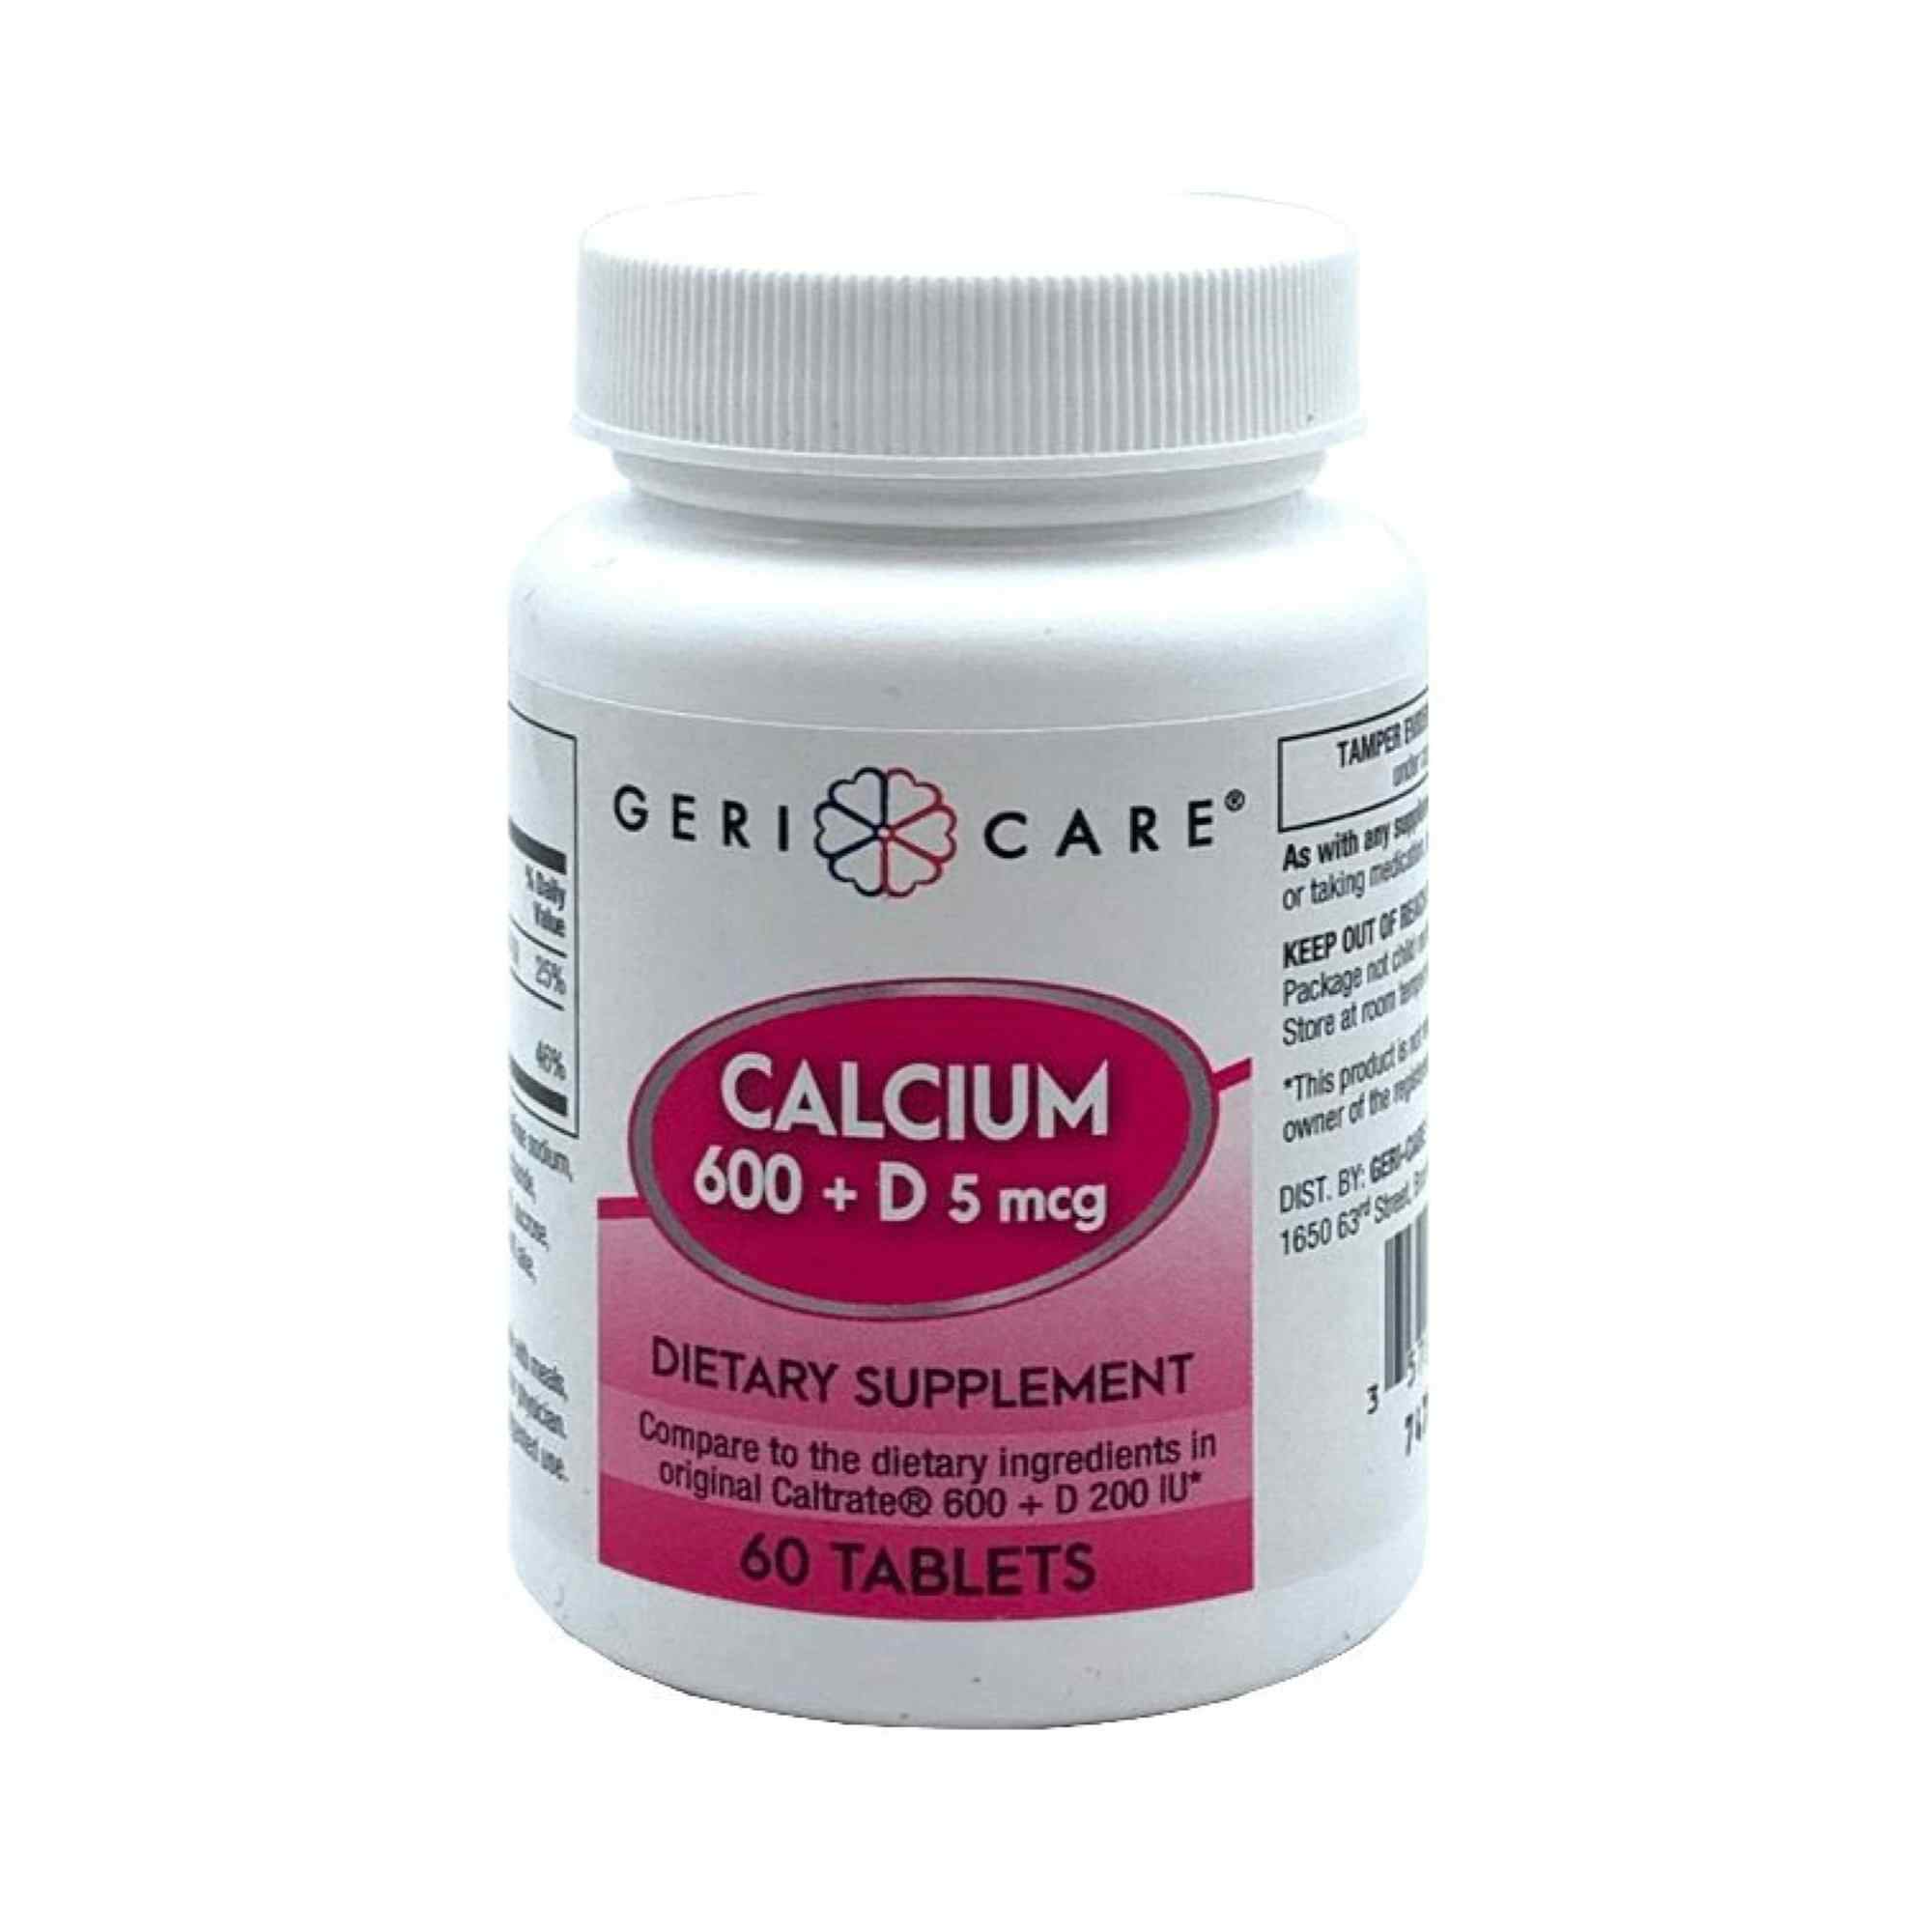 Geri-Care Calcium 600 + D3 Dietary Supplement, 600 mg - 200 IU, 60 Tablets , 747-06-GCP, 1 Bottle